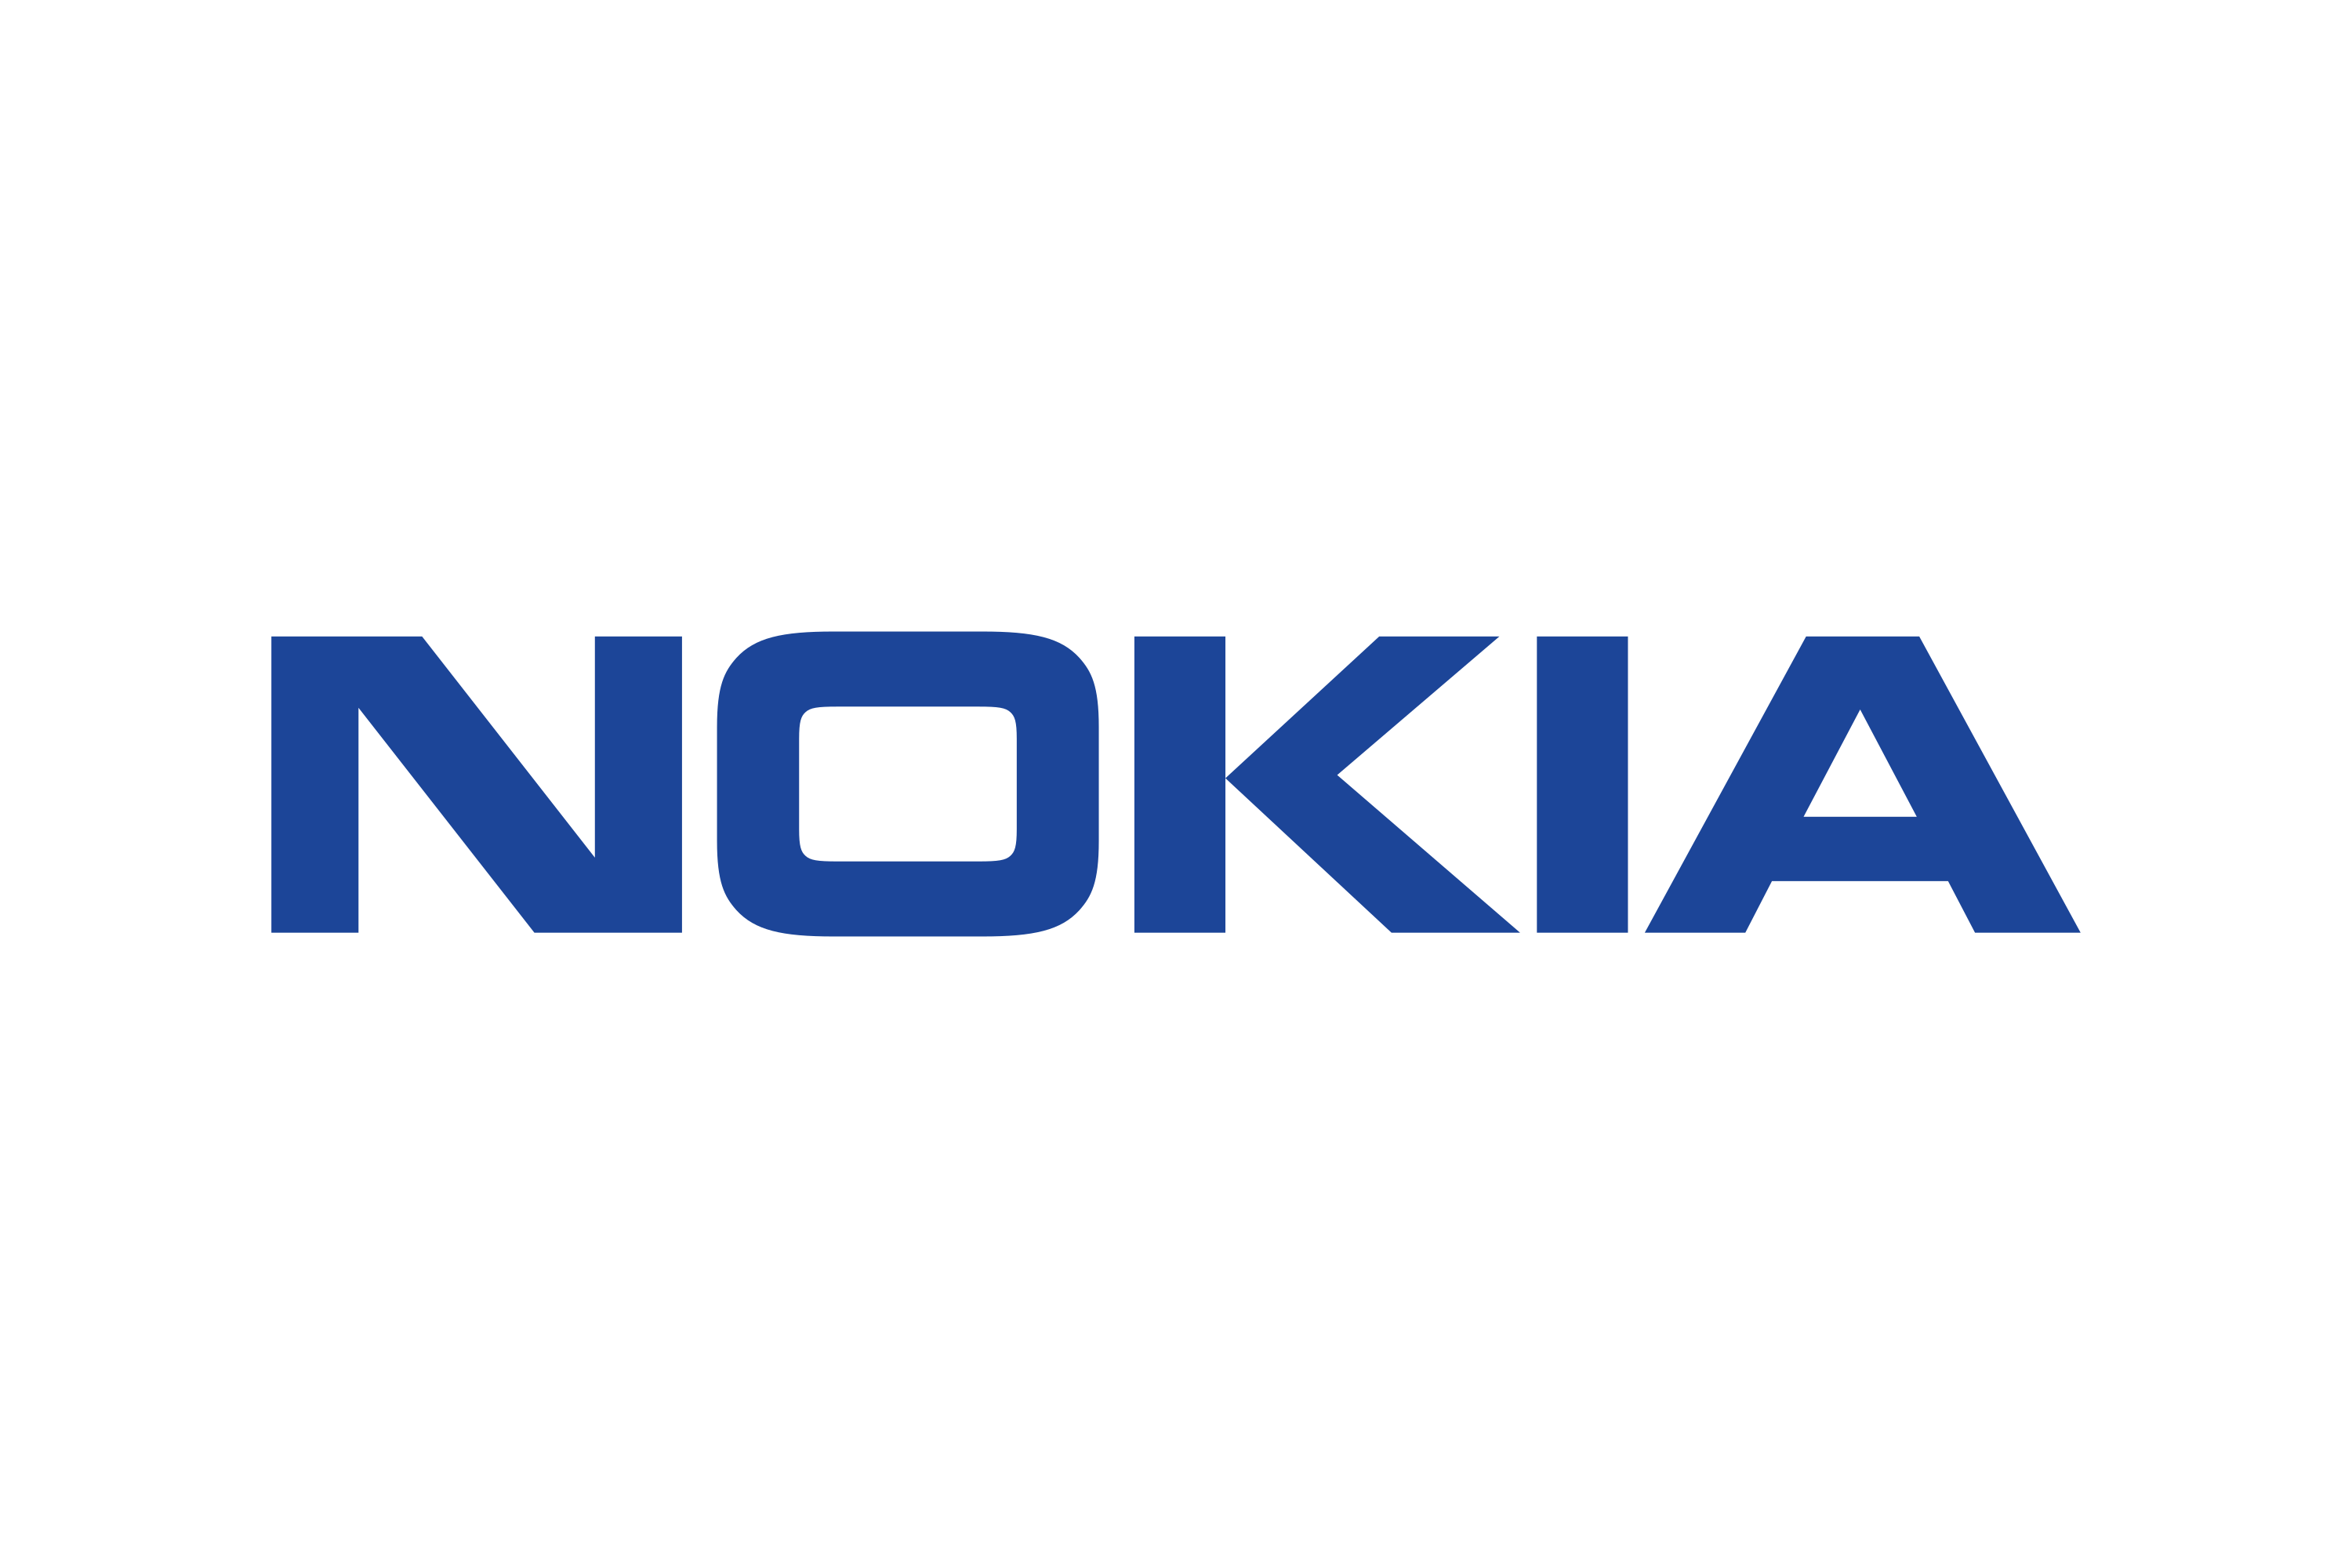 Nokia 2 V Tella Soft Reset Guide [Frozen Screen Fix]